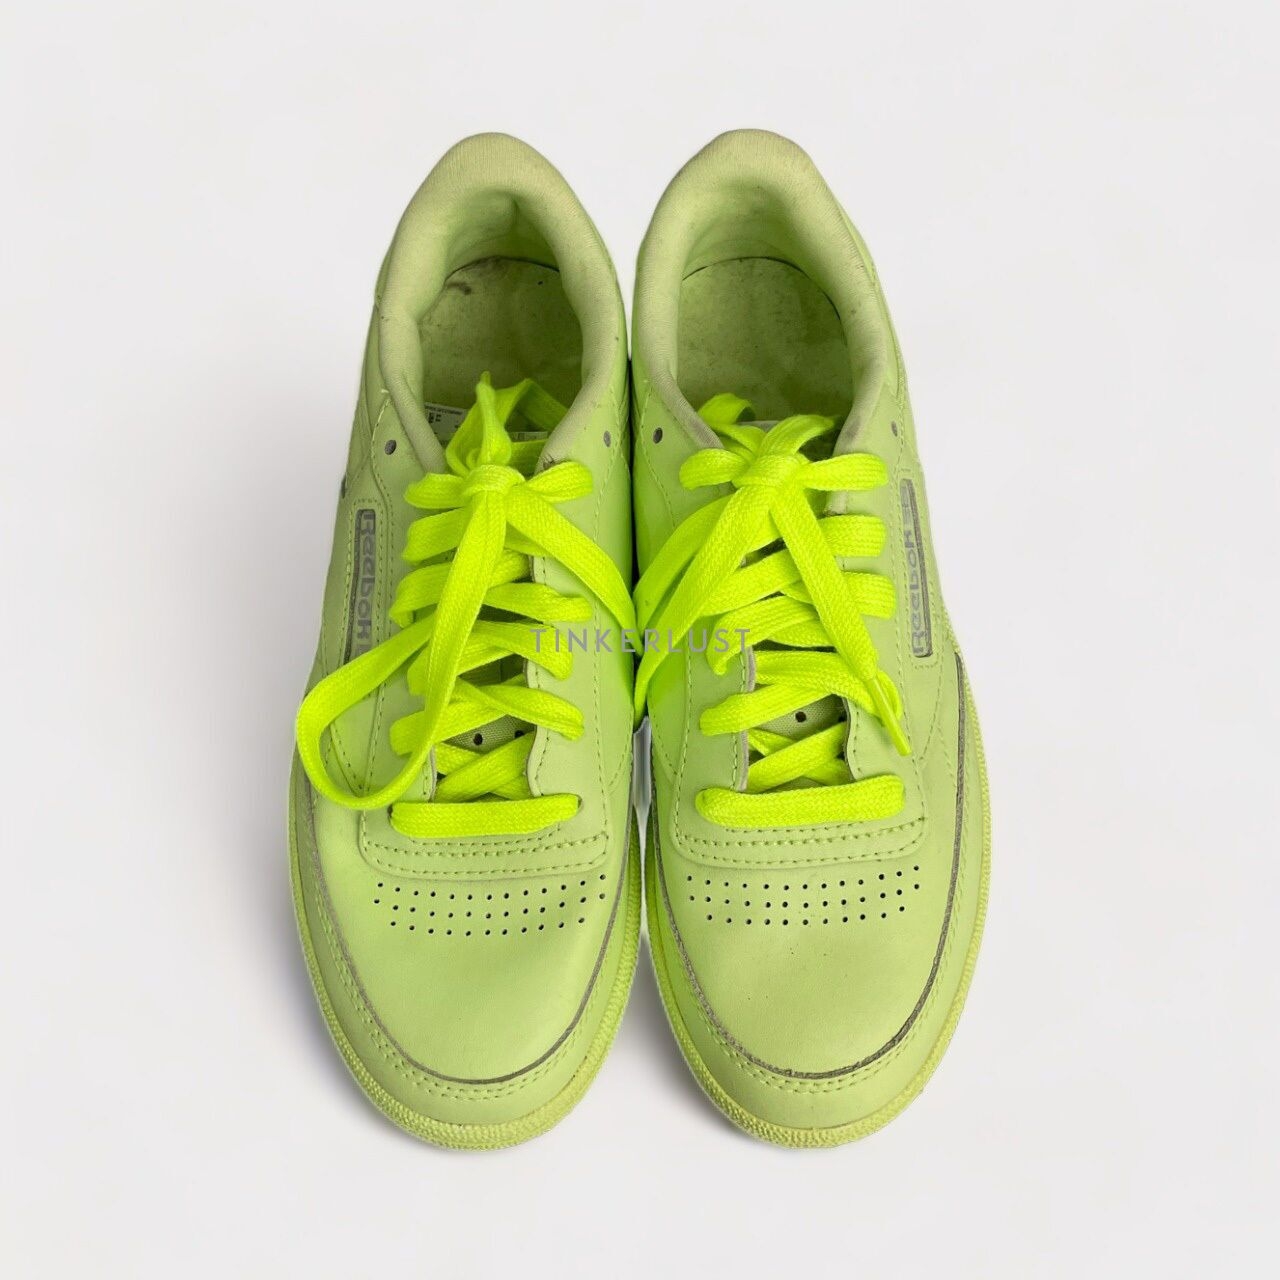 Reebok Green Sneakers